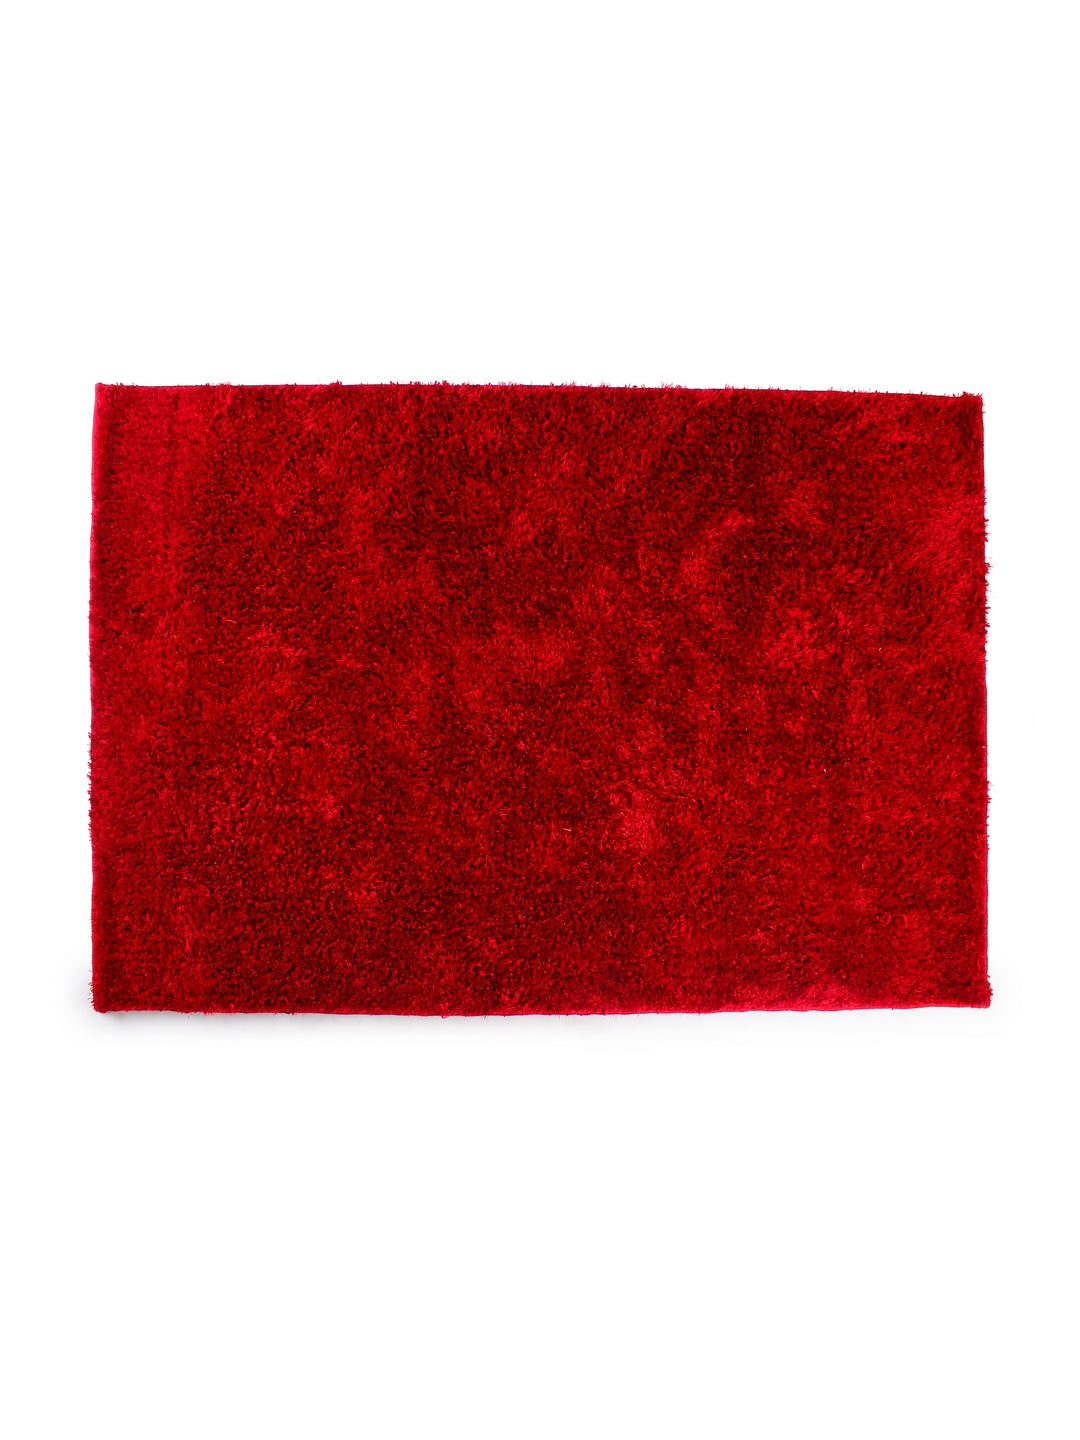 Red Solid Anti-Skid Carpet/Rug